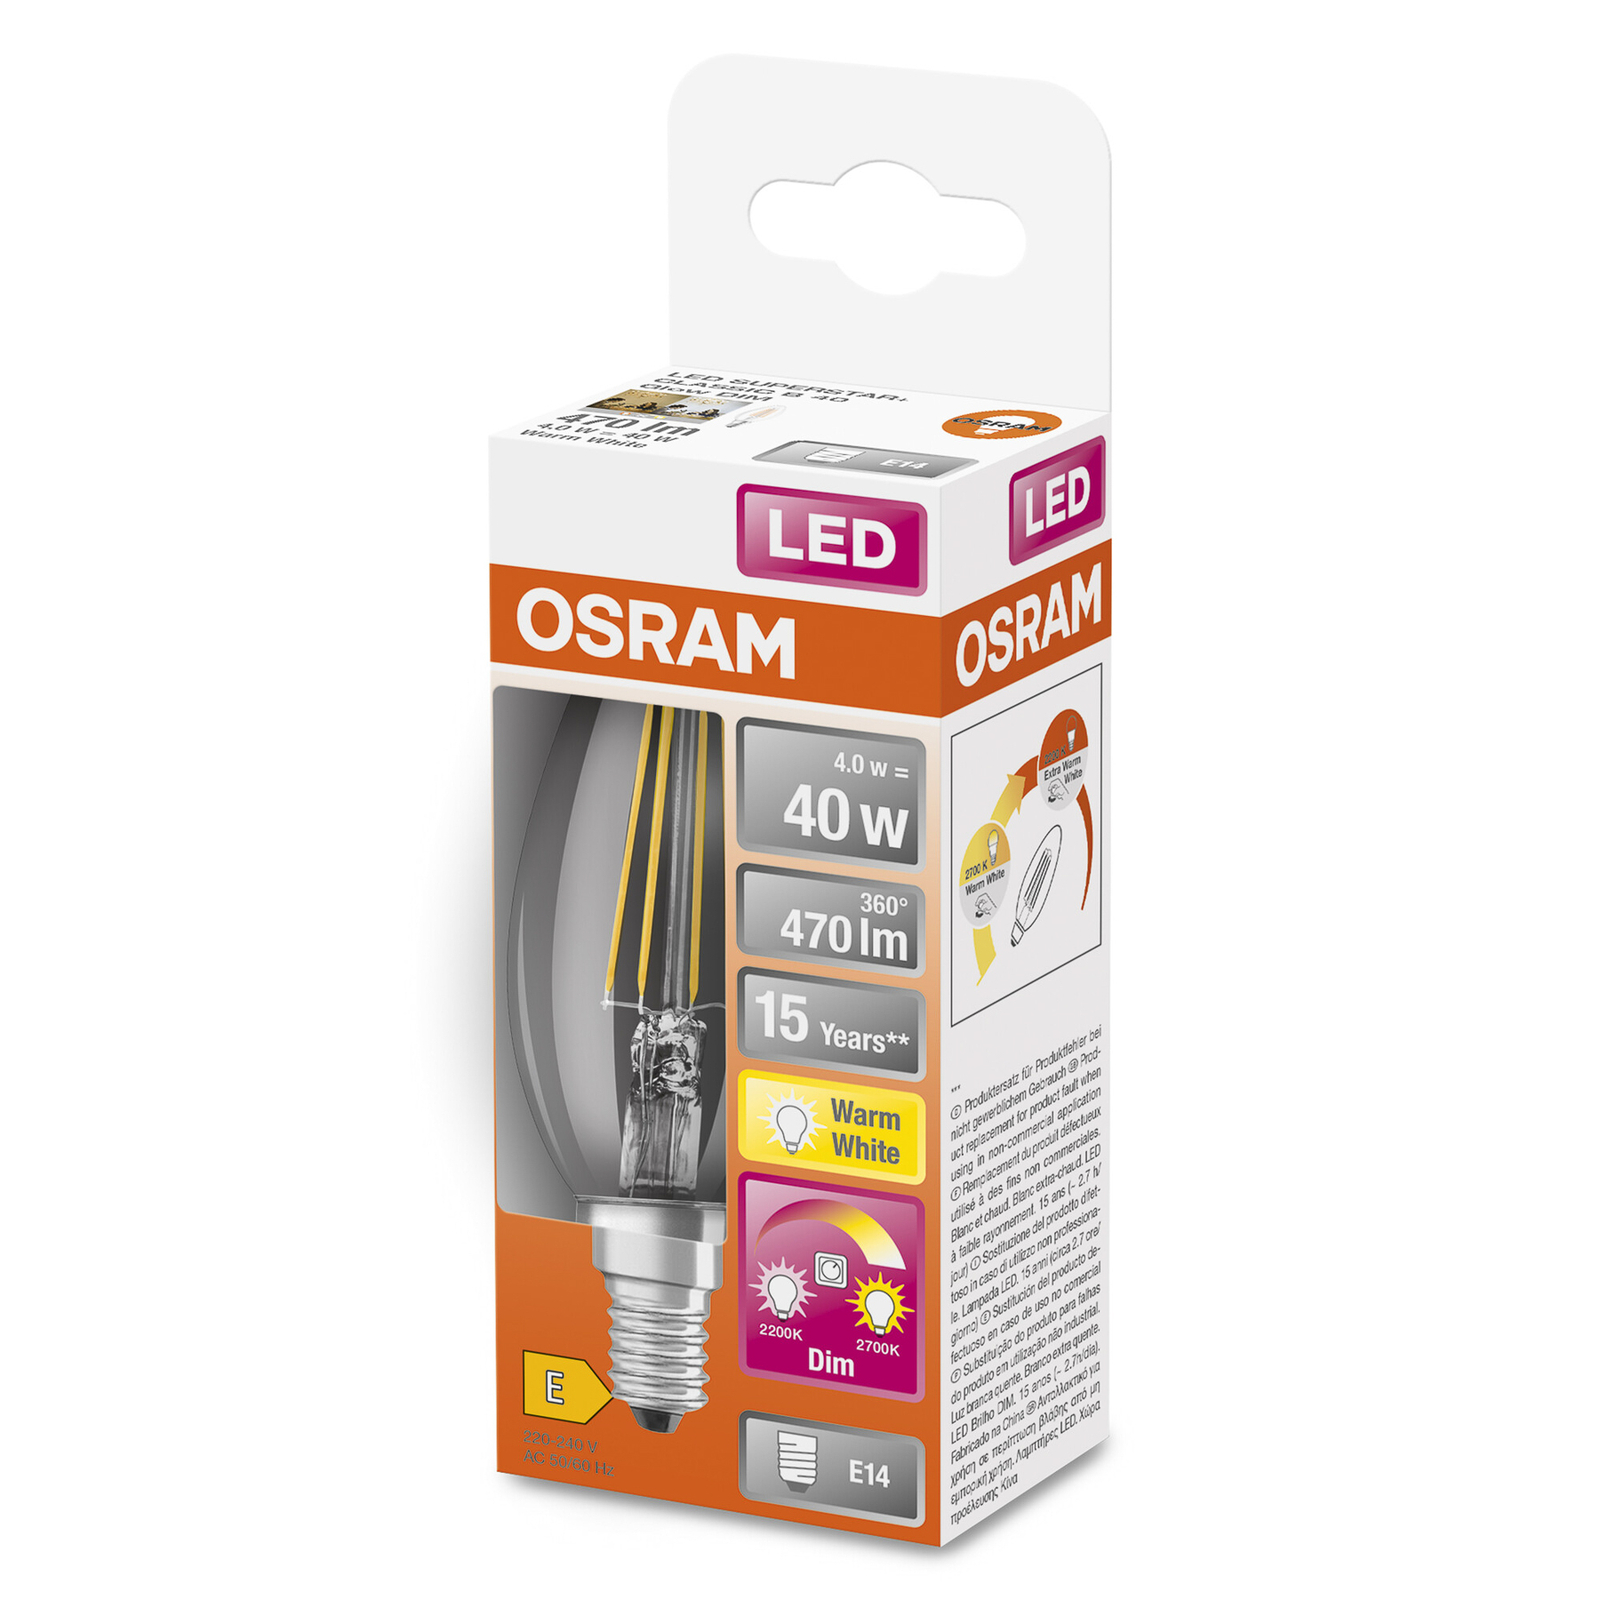 OSRAM LED lamp E14 4W GLOWdim helder